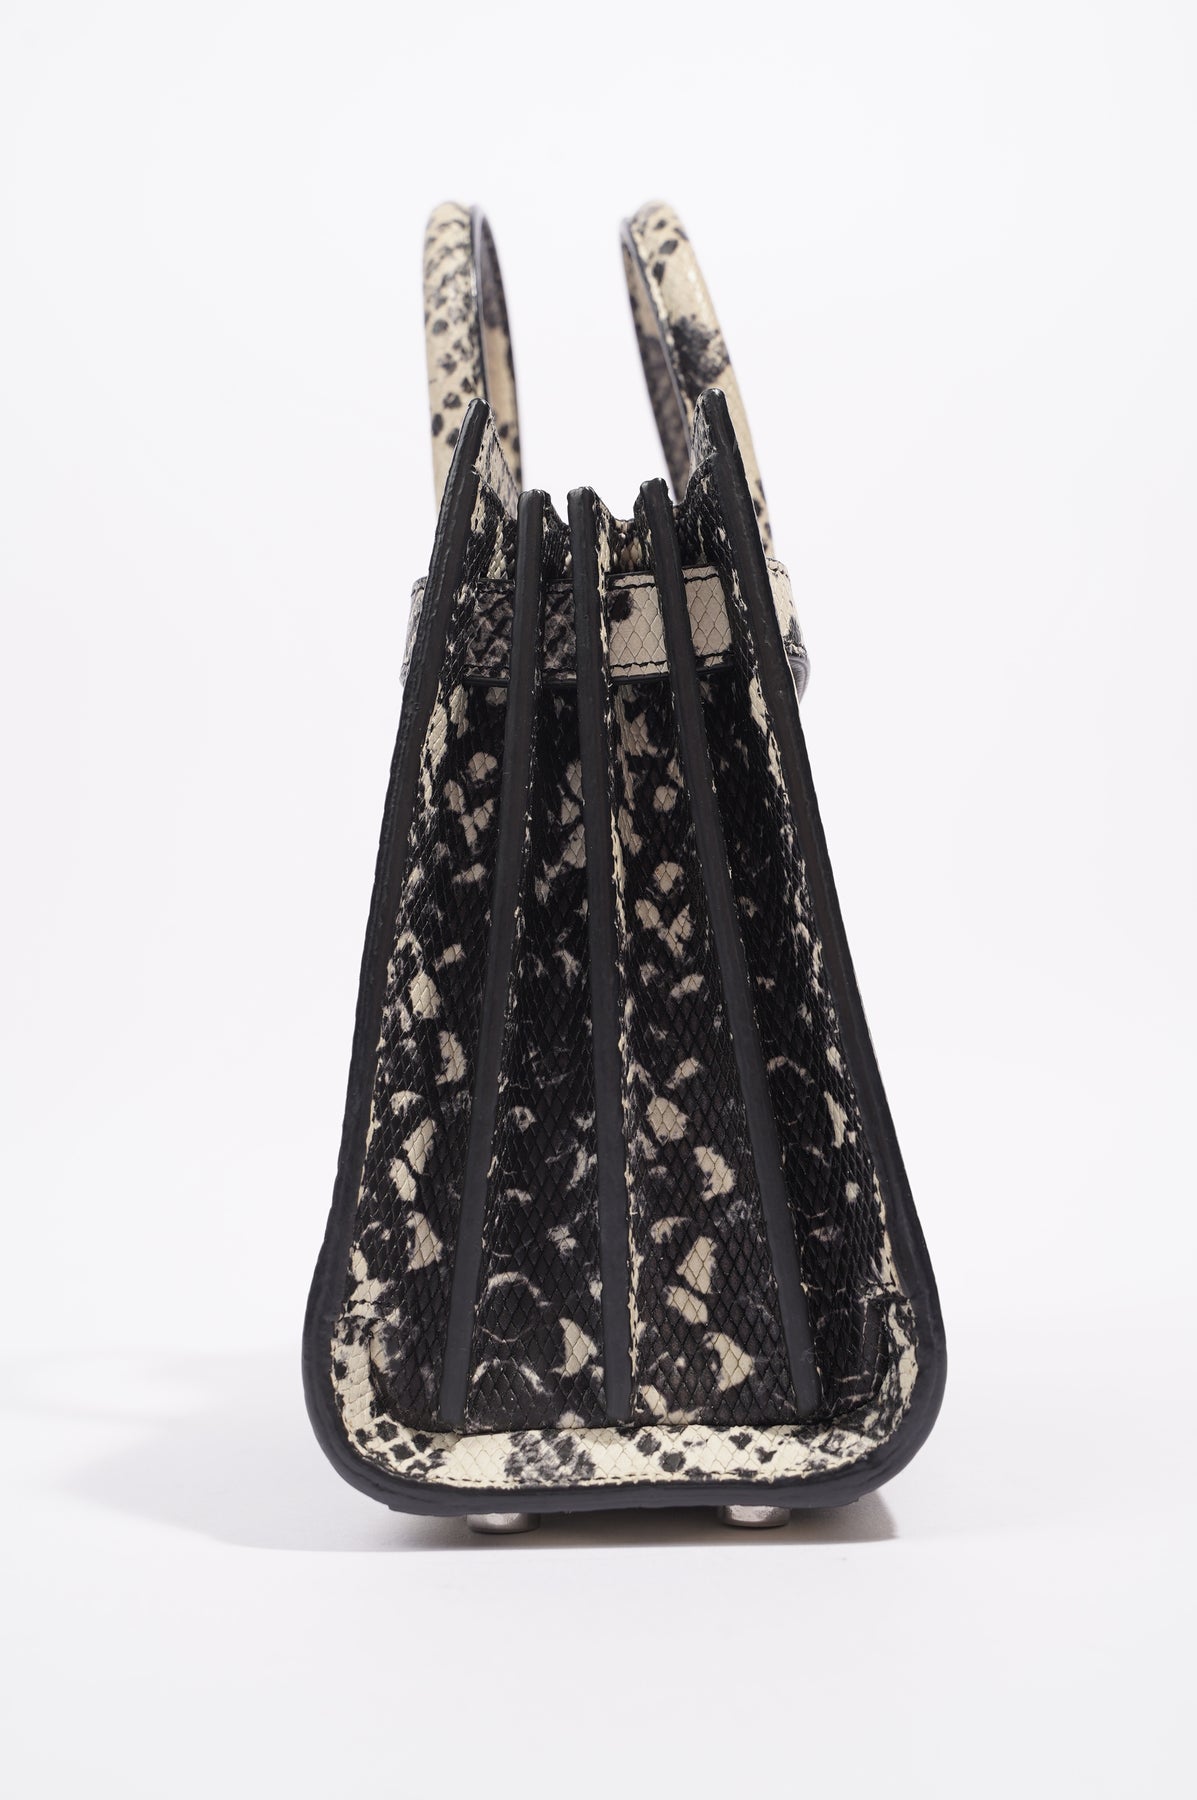 Shop Louis Vuitton Daily pouch (M62937) by design◇base